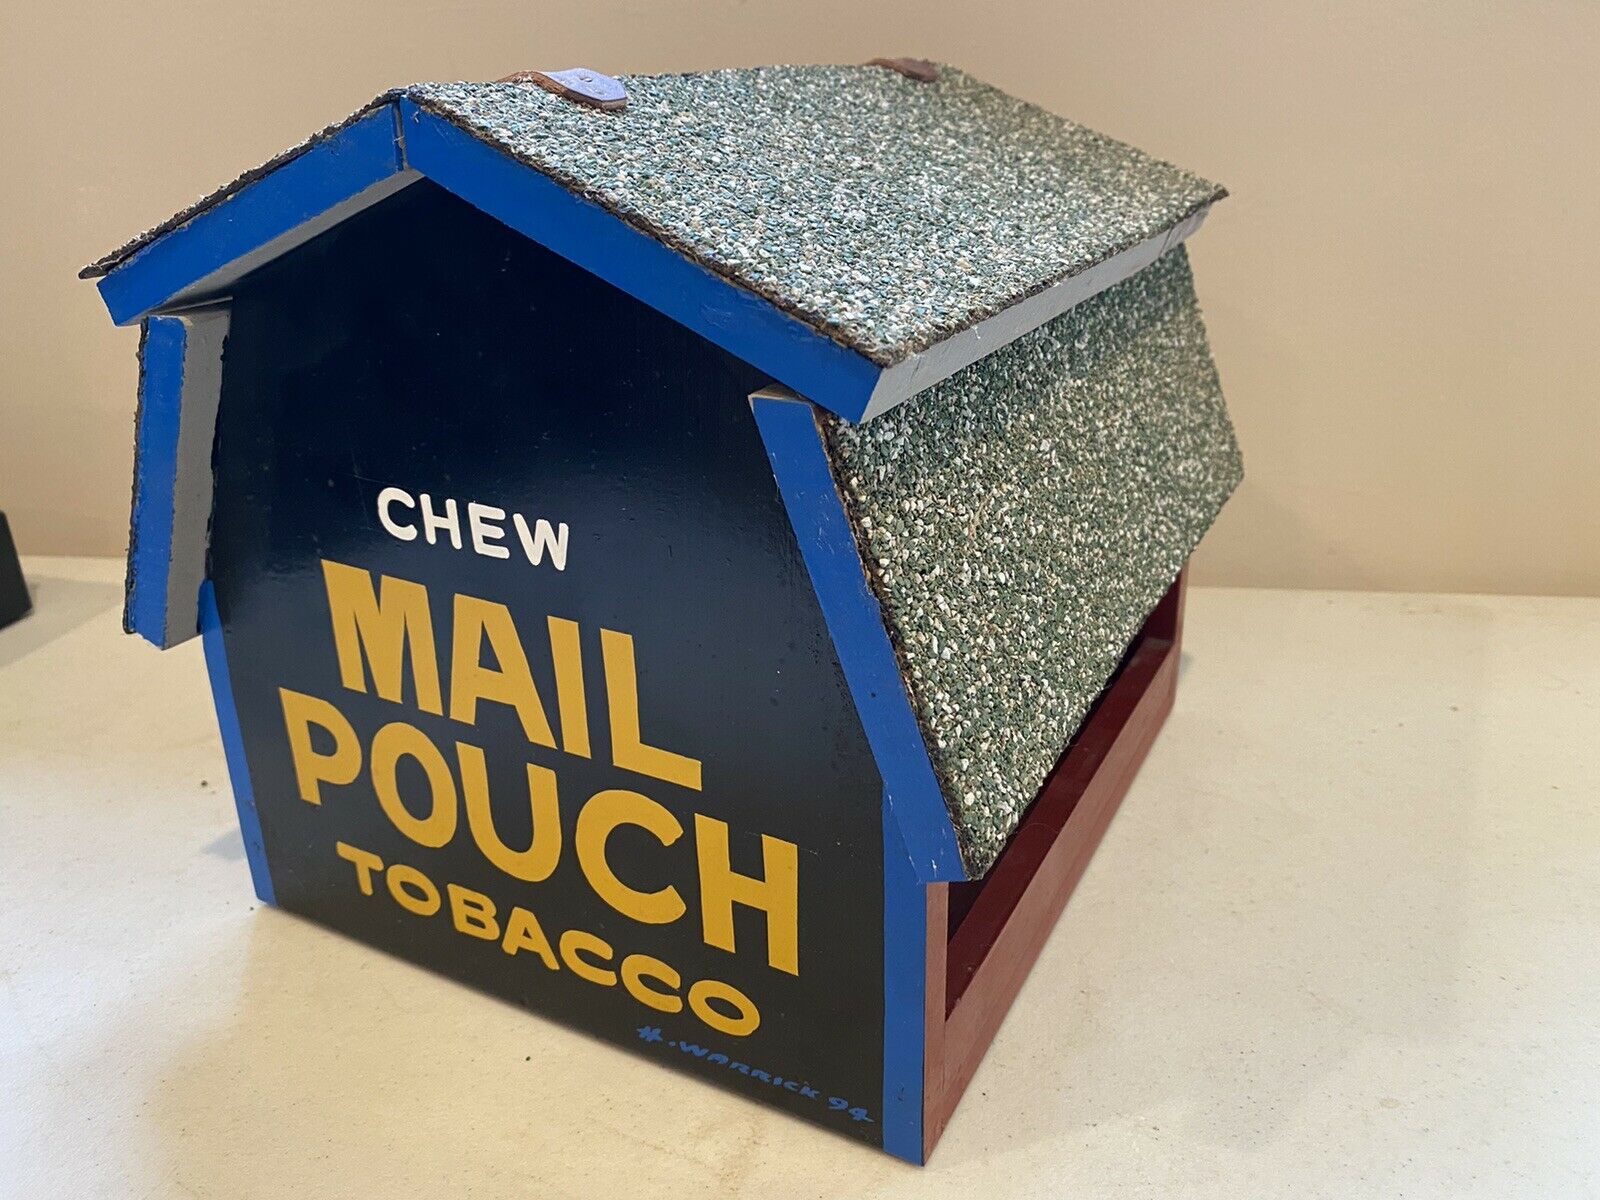 Vintage Mail Pouch Tobacco Barn Bird Feeder Signed By Harley Warrwick 1994